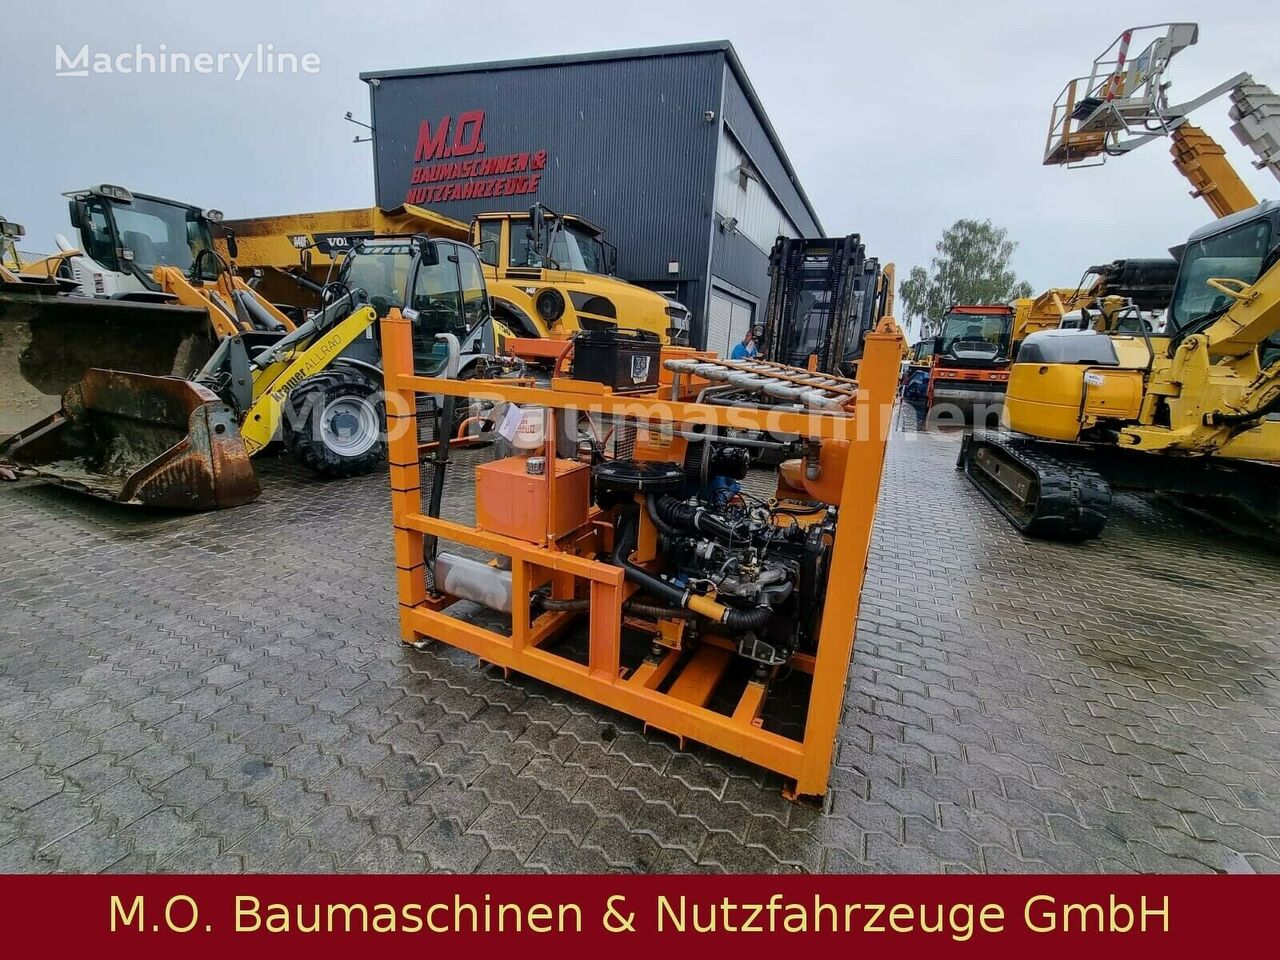 Hofmann Hagg / Mackierungsmaschine stroj za označavanje cesta